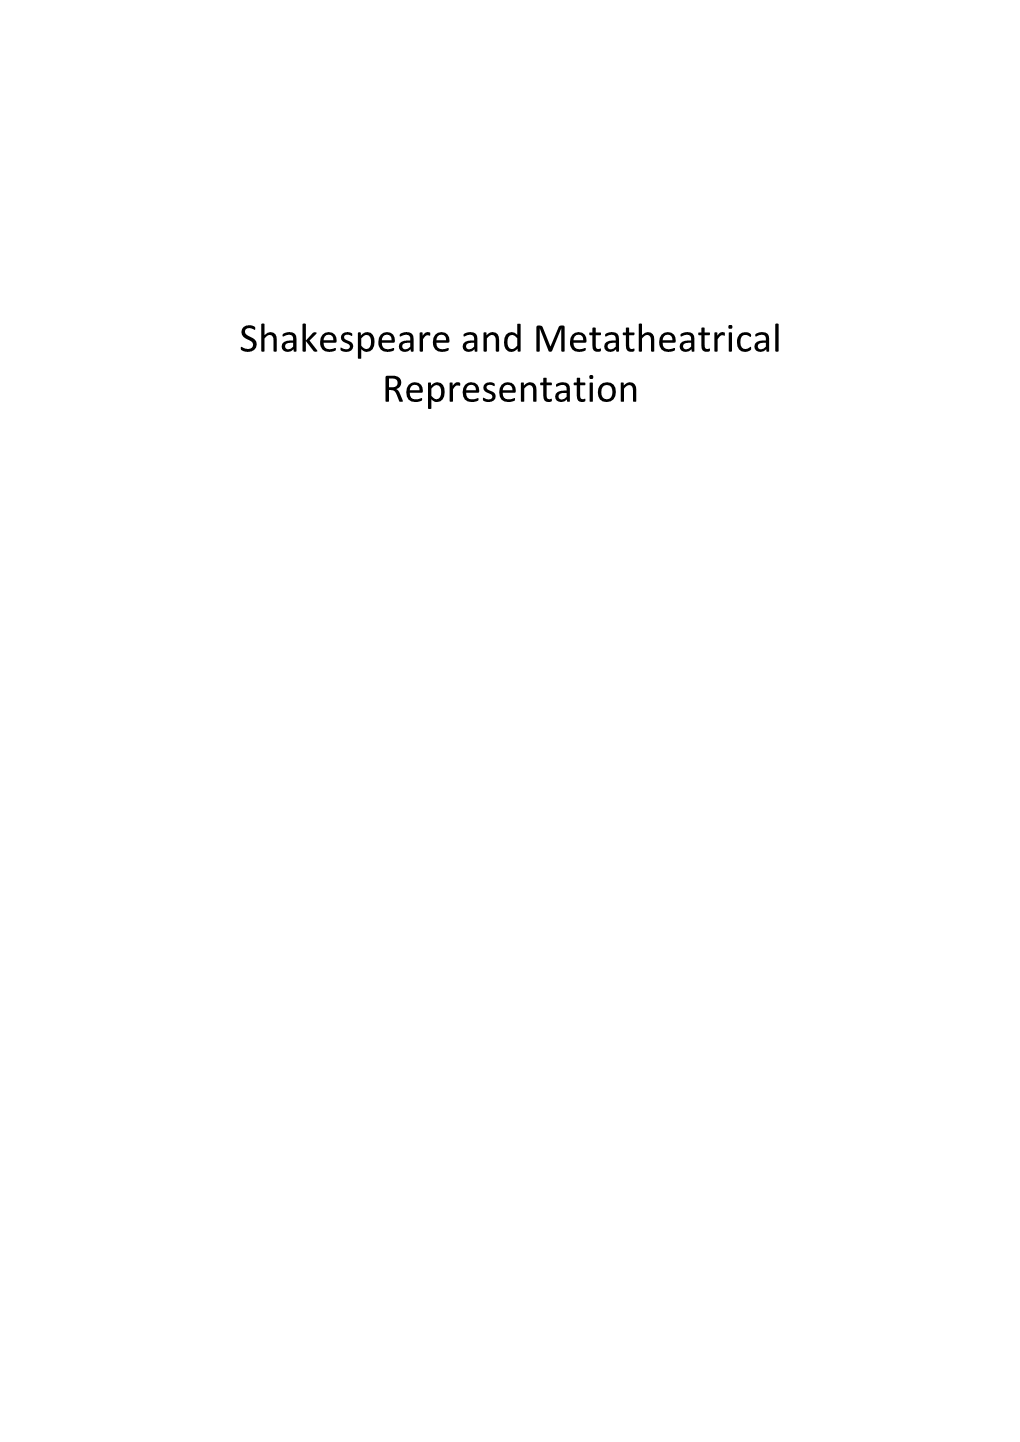 Shakespeare and Metatheatrical Representation